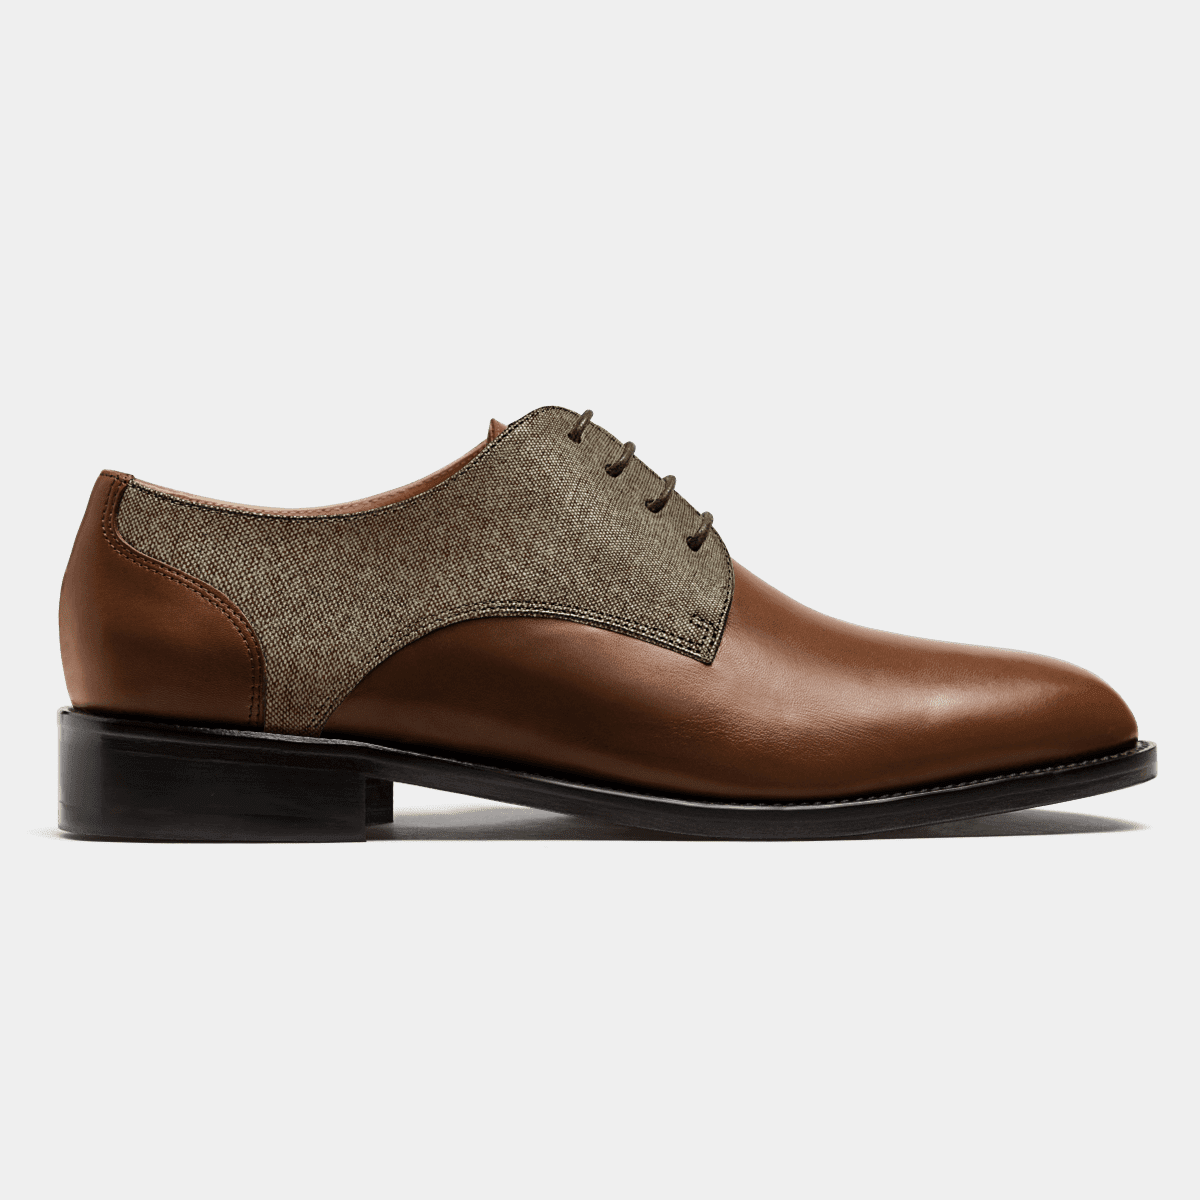 Derby shoes - brown leather & tweed